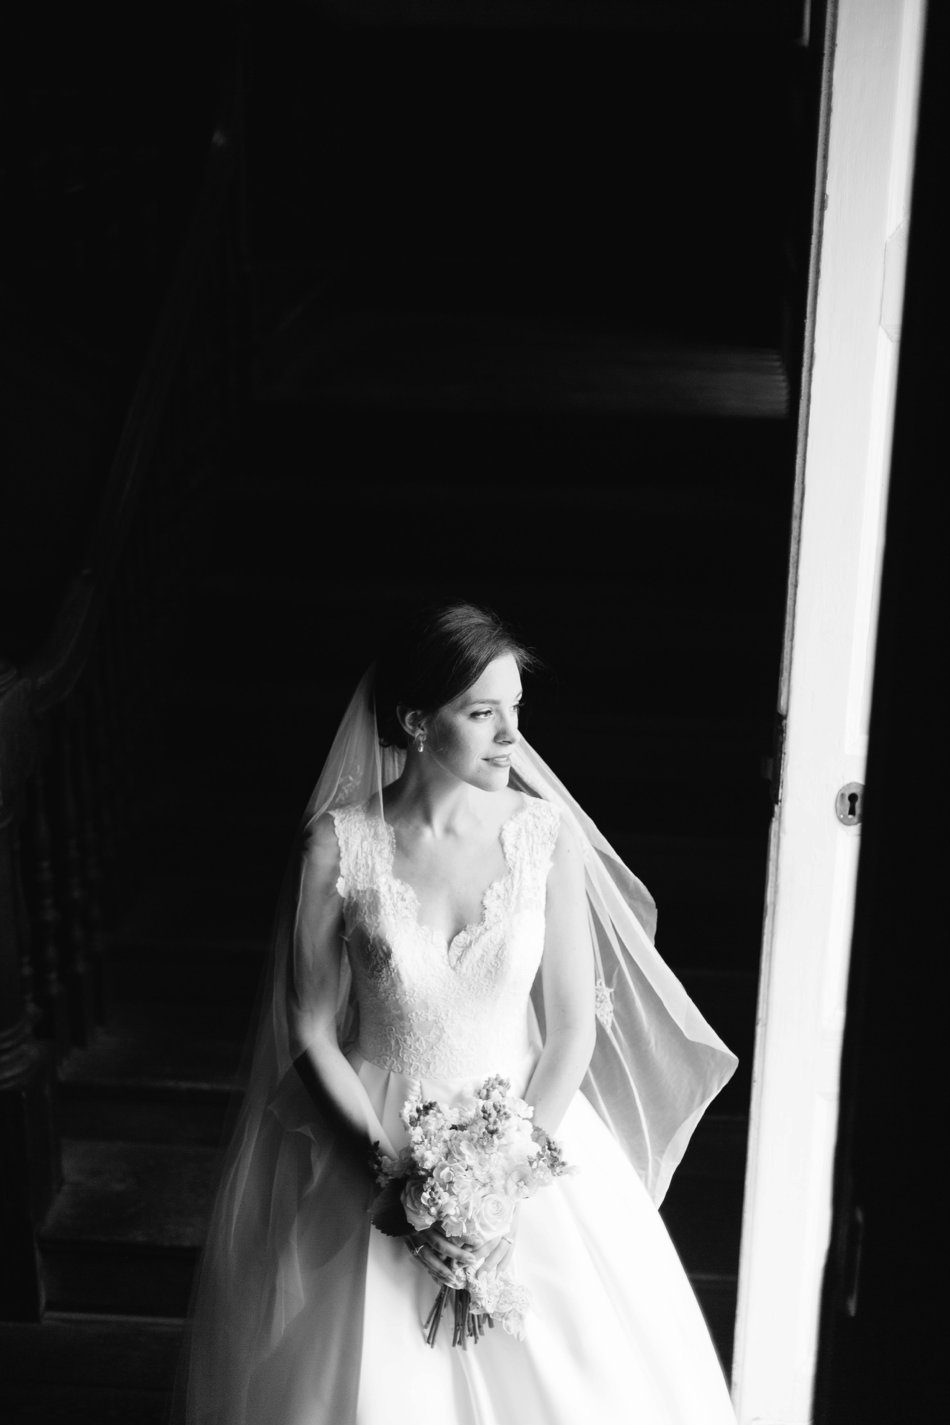 classic black and white portrait of a bride